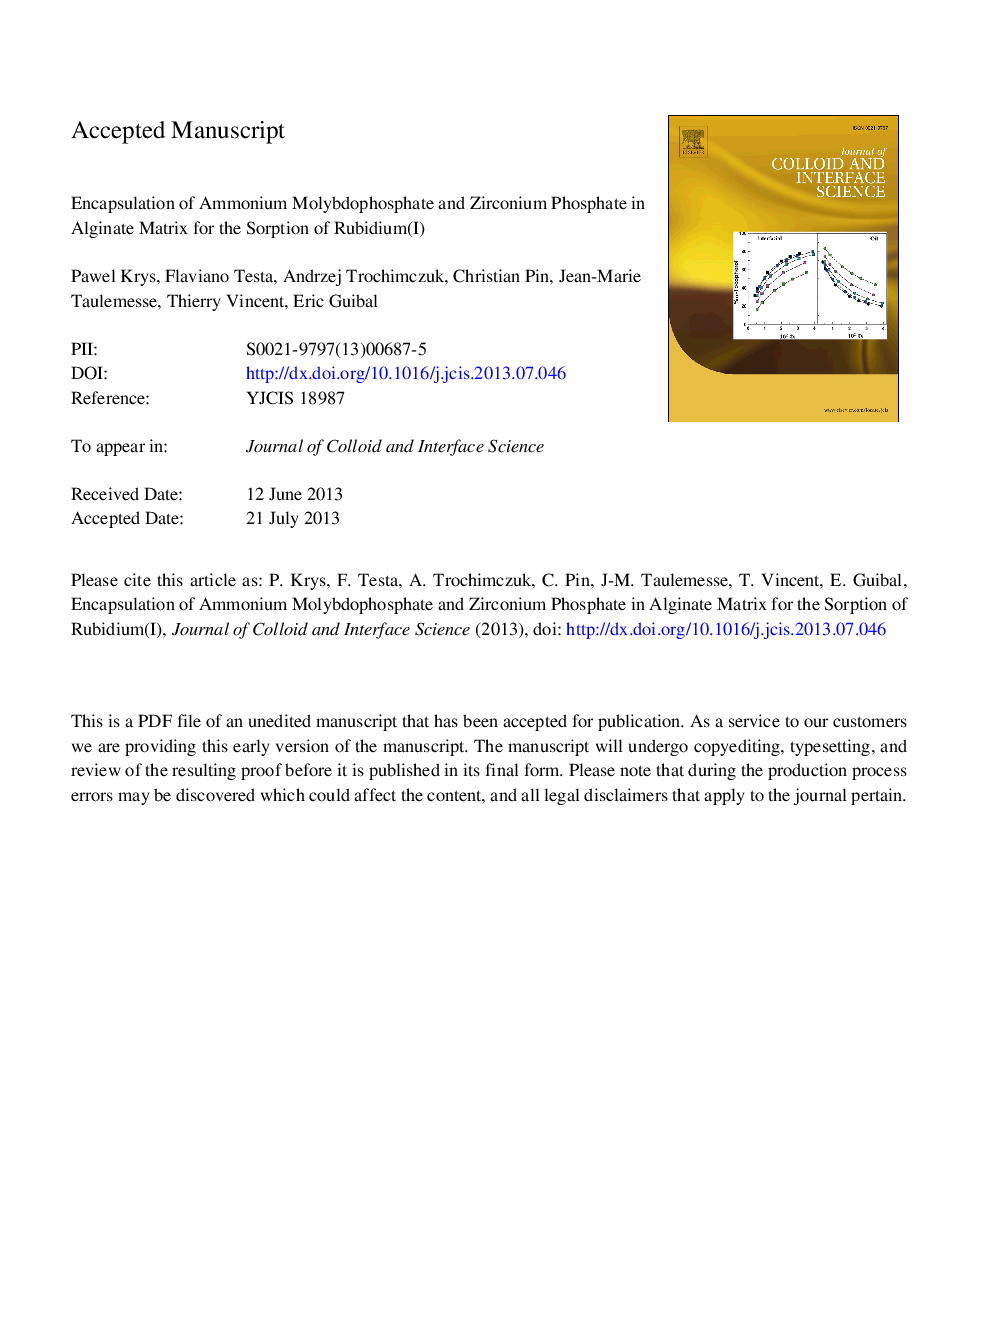 Encapsulation of ammonium molybdophosphate and zirconium phosphate in alginate matrix for the sorption of rubidium(I)